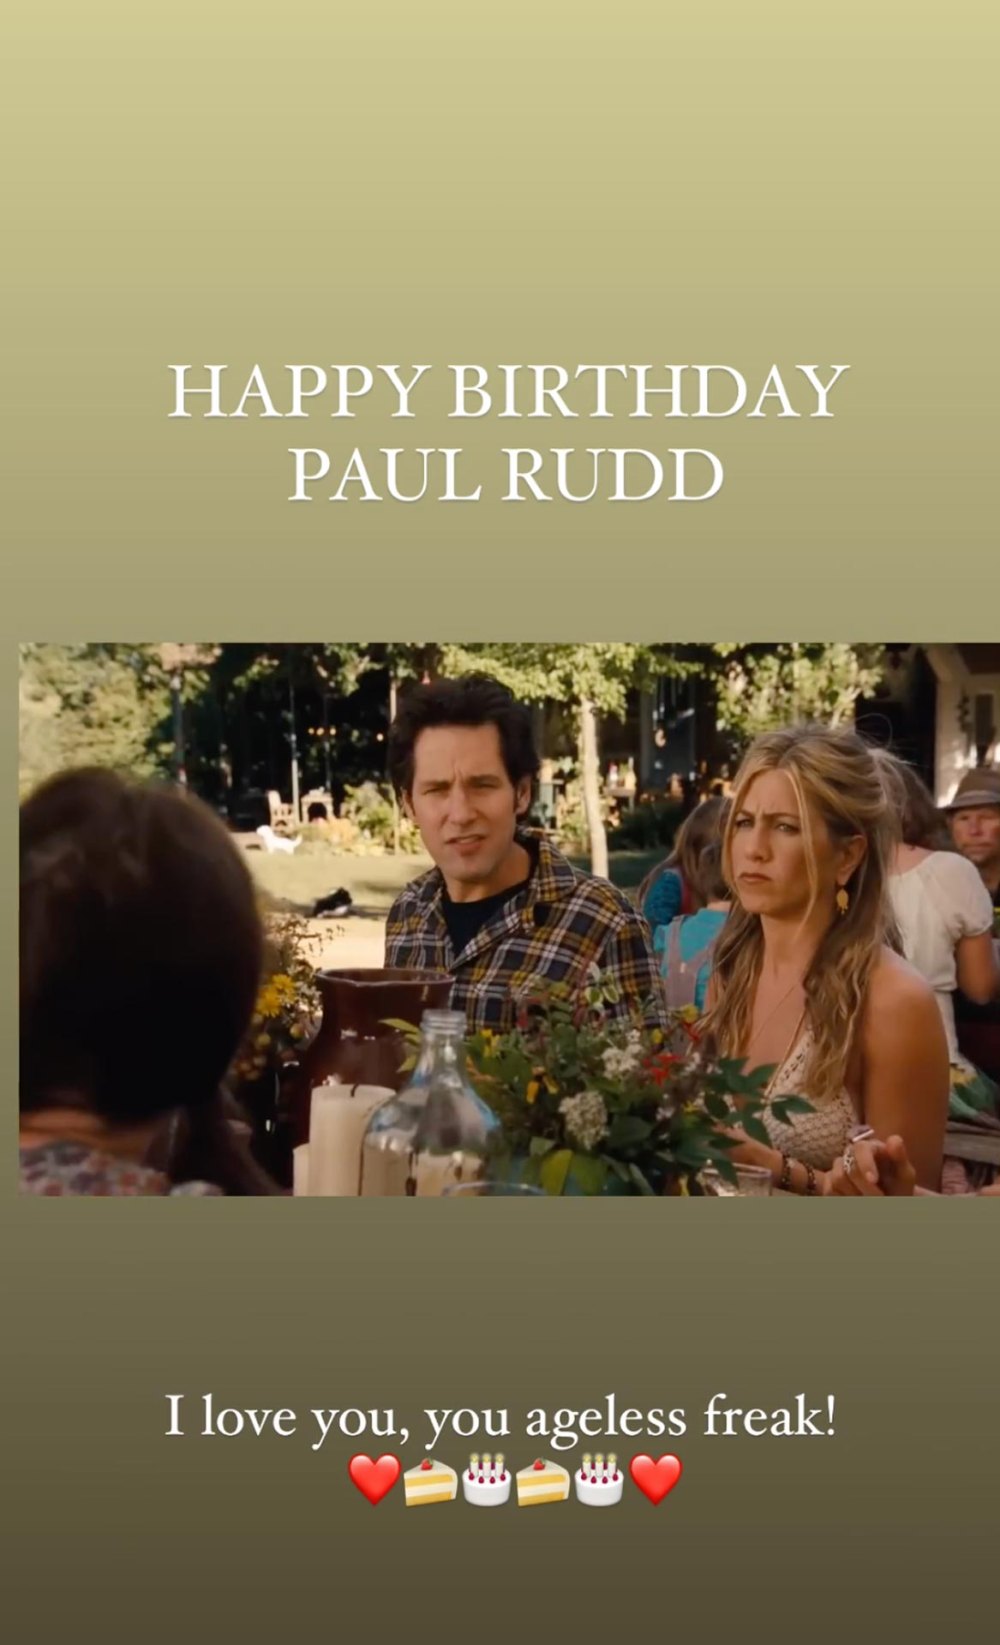 Jennifer Aniston Calls Paul Rudd an Ageless Freak on His Birthday